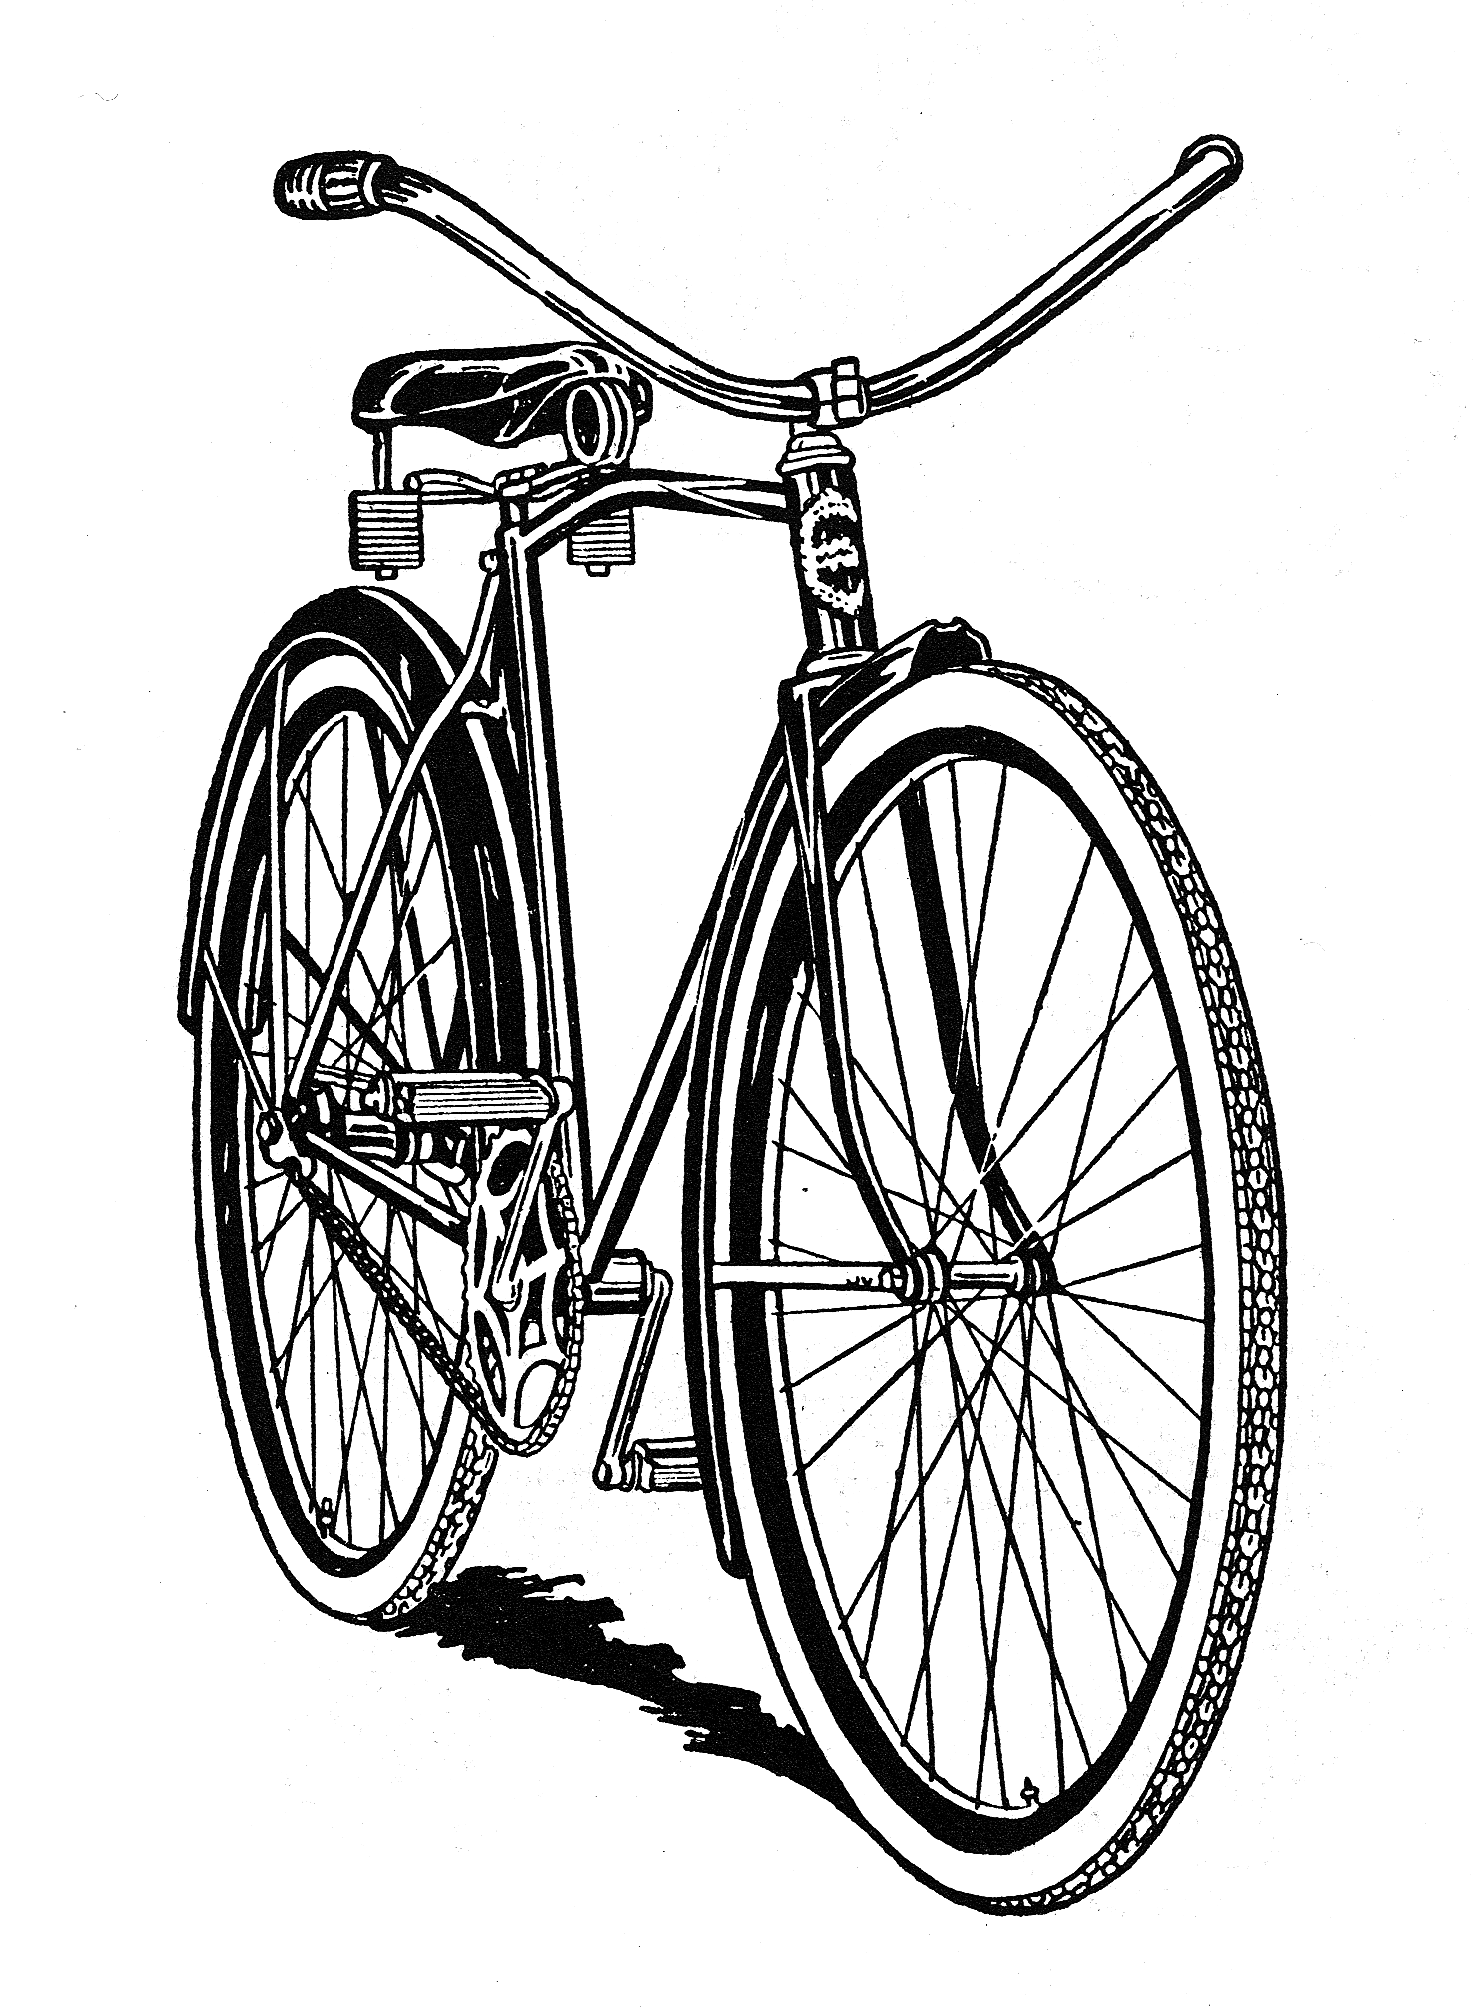 Public Domain Bicycle 2 - Free Clip Art